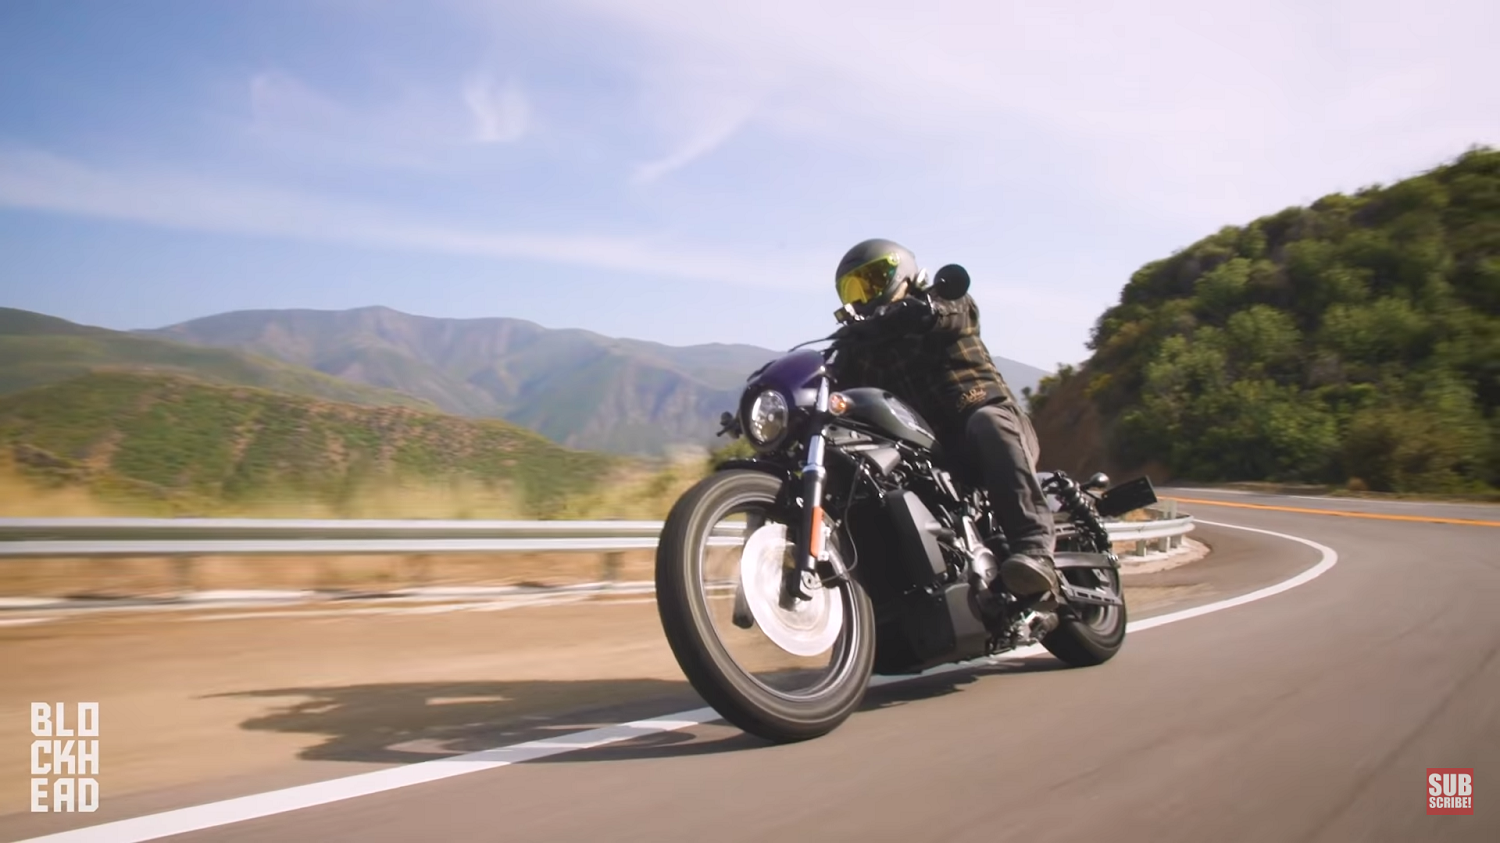 2022 Harley-Davidson Nightster is a good bike according to BLOCKHEAD